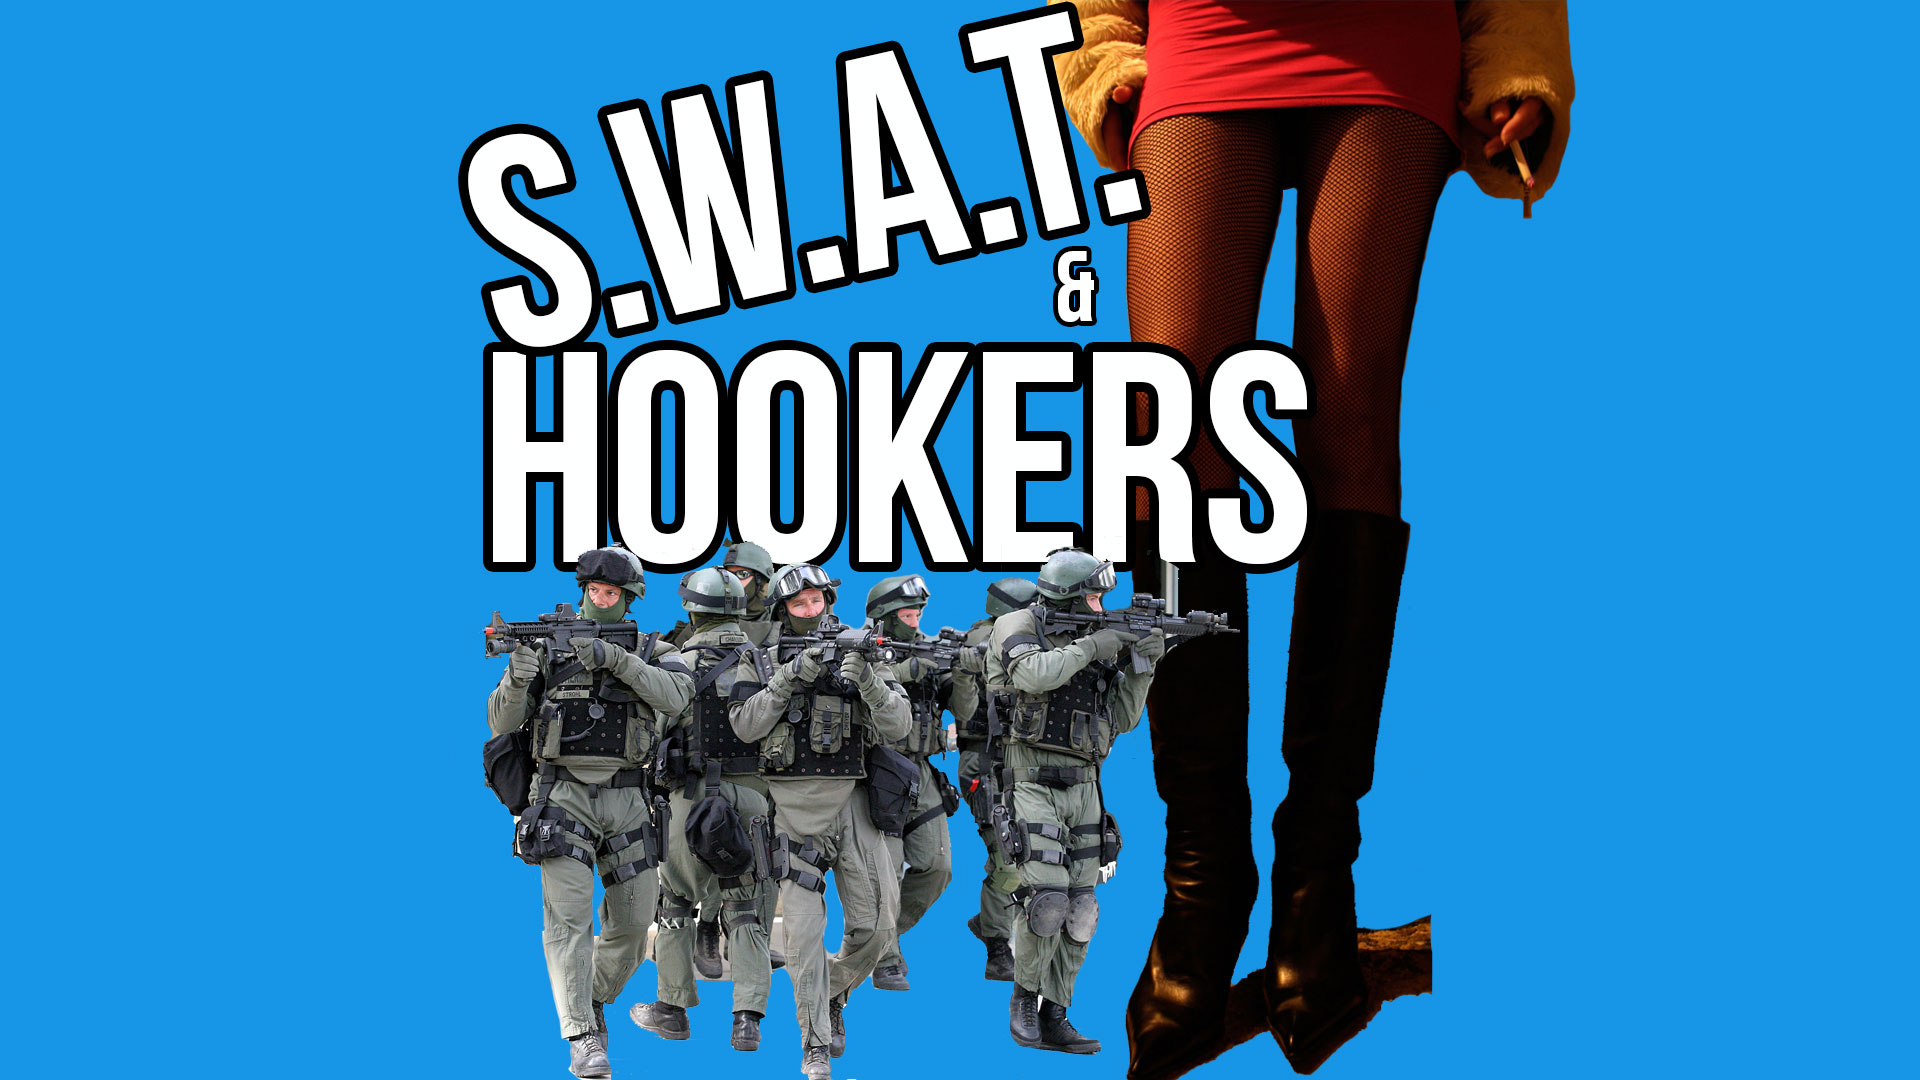 PNN-217-SWAT-Steals-from-Prostitutes-sans